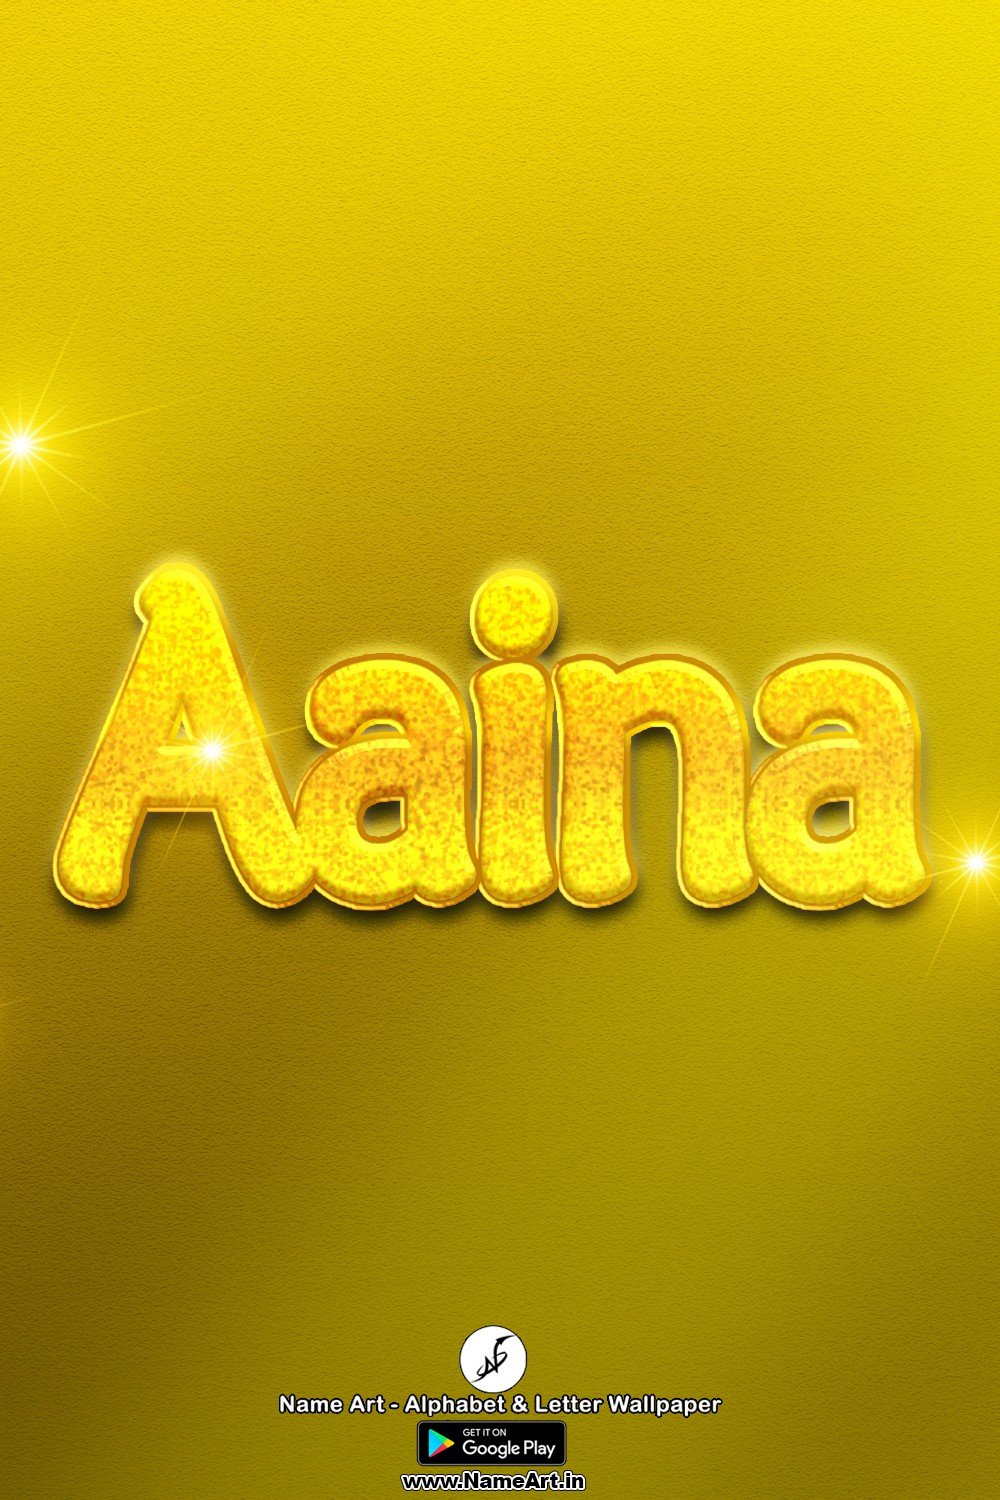 Aaina | Whatsapp Status Aaina || Happy Birthday To You !! | Aaina Whatsapp Status images |